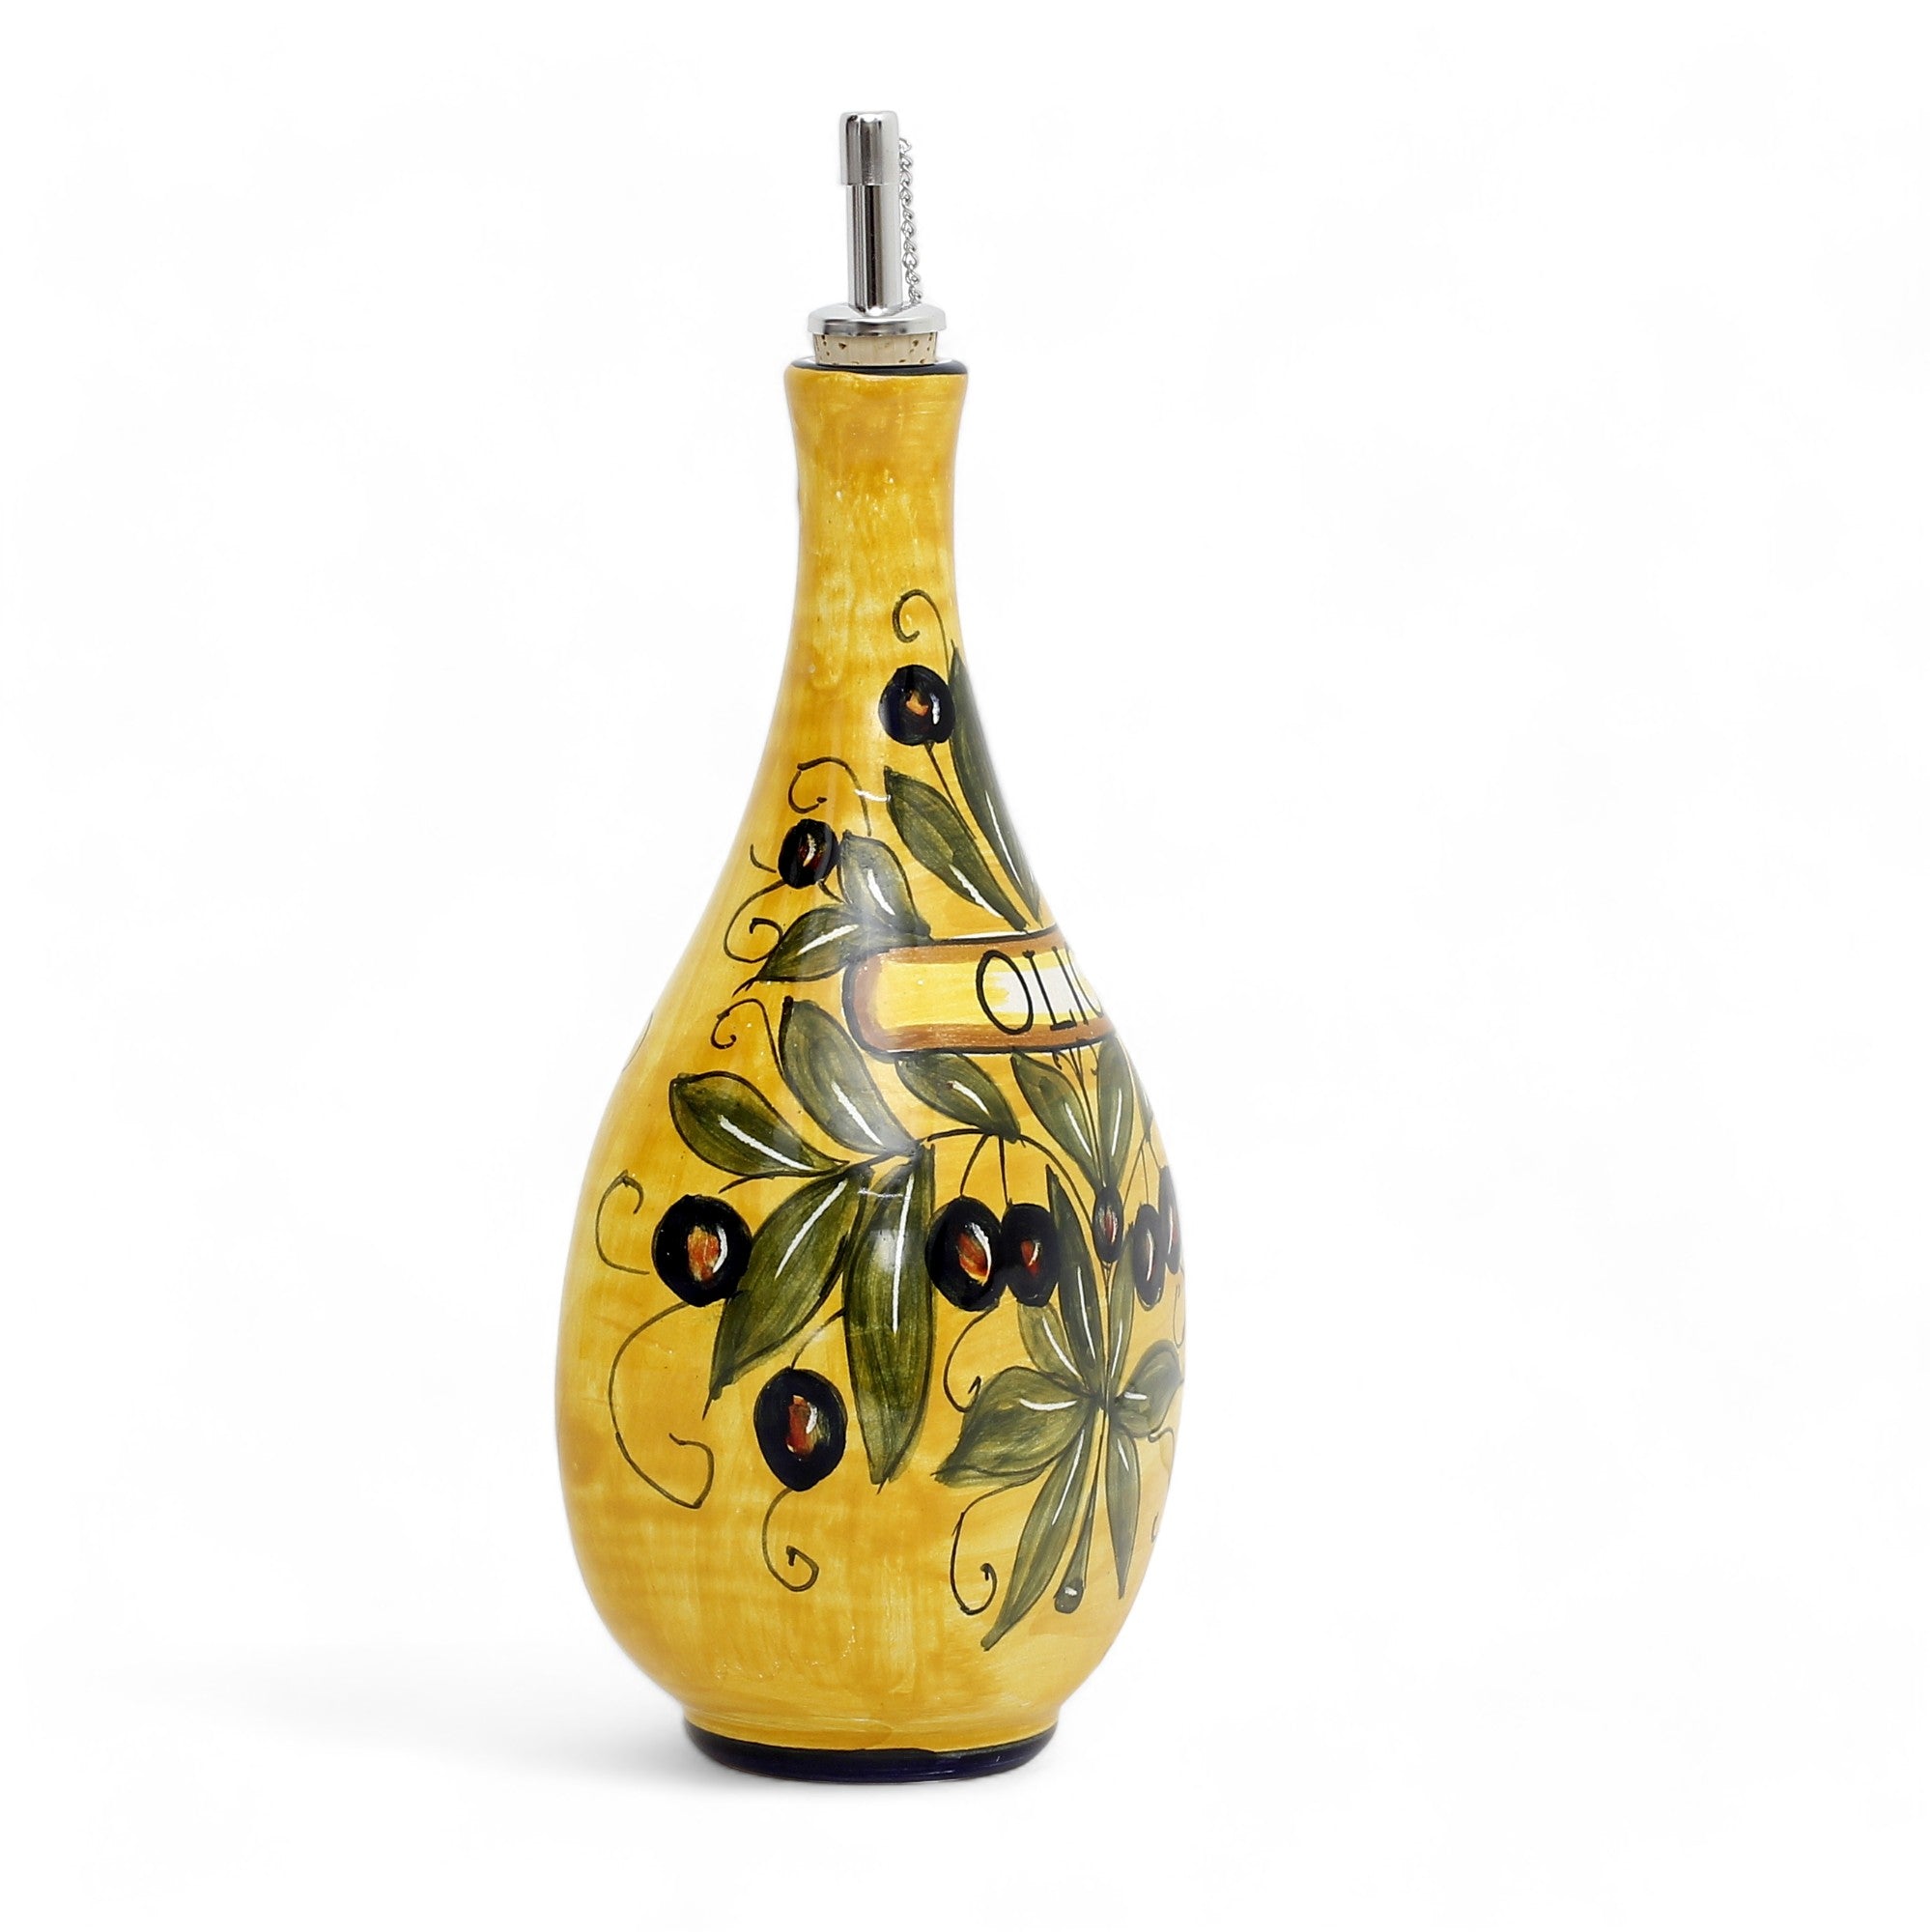 OLIVO: Olive Oil Flatten Bottle with OLIO script